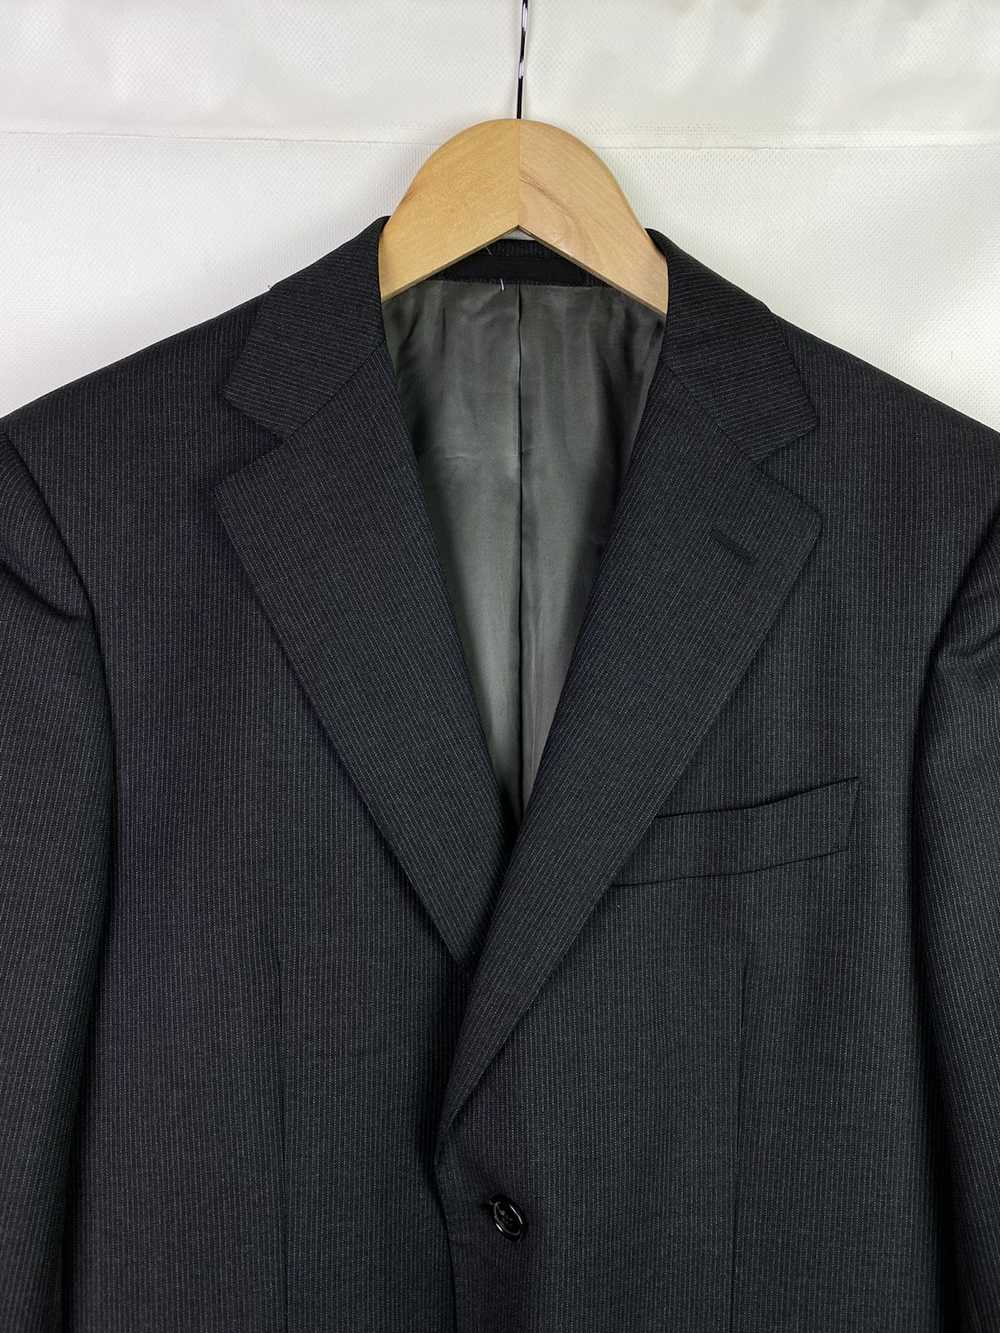 Suitsupply Suitsupply men’s wool blazer jacket si… - image 8